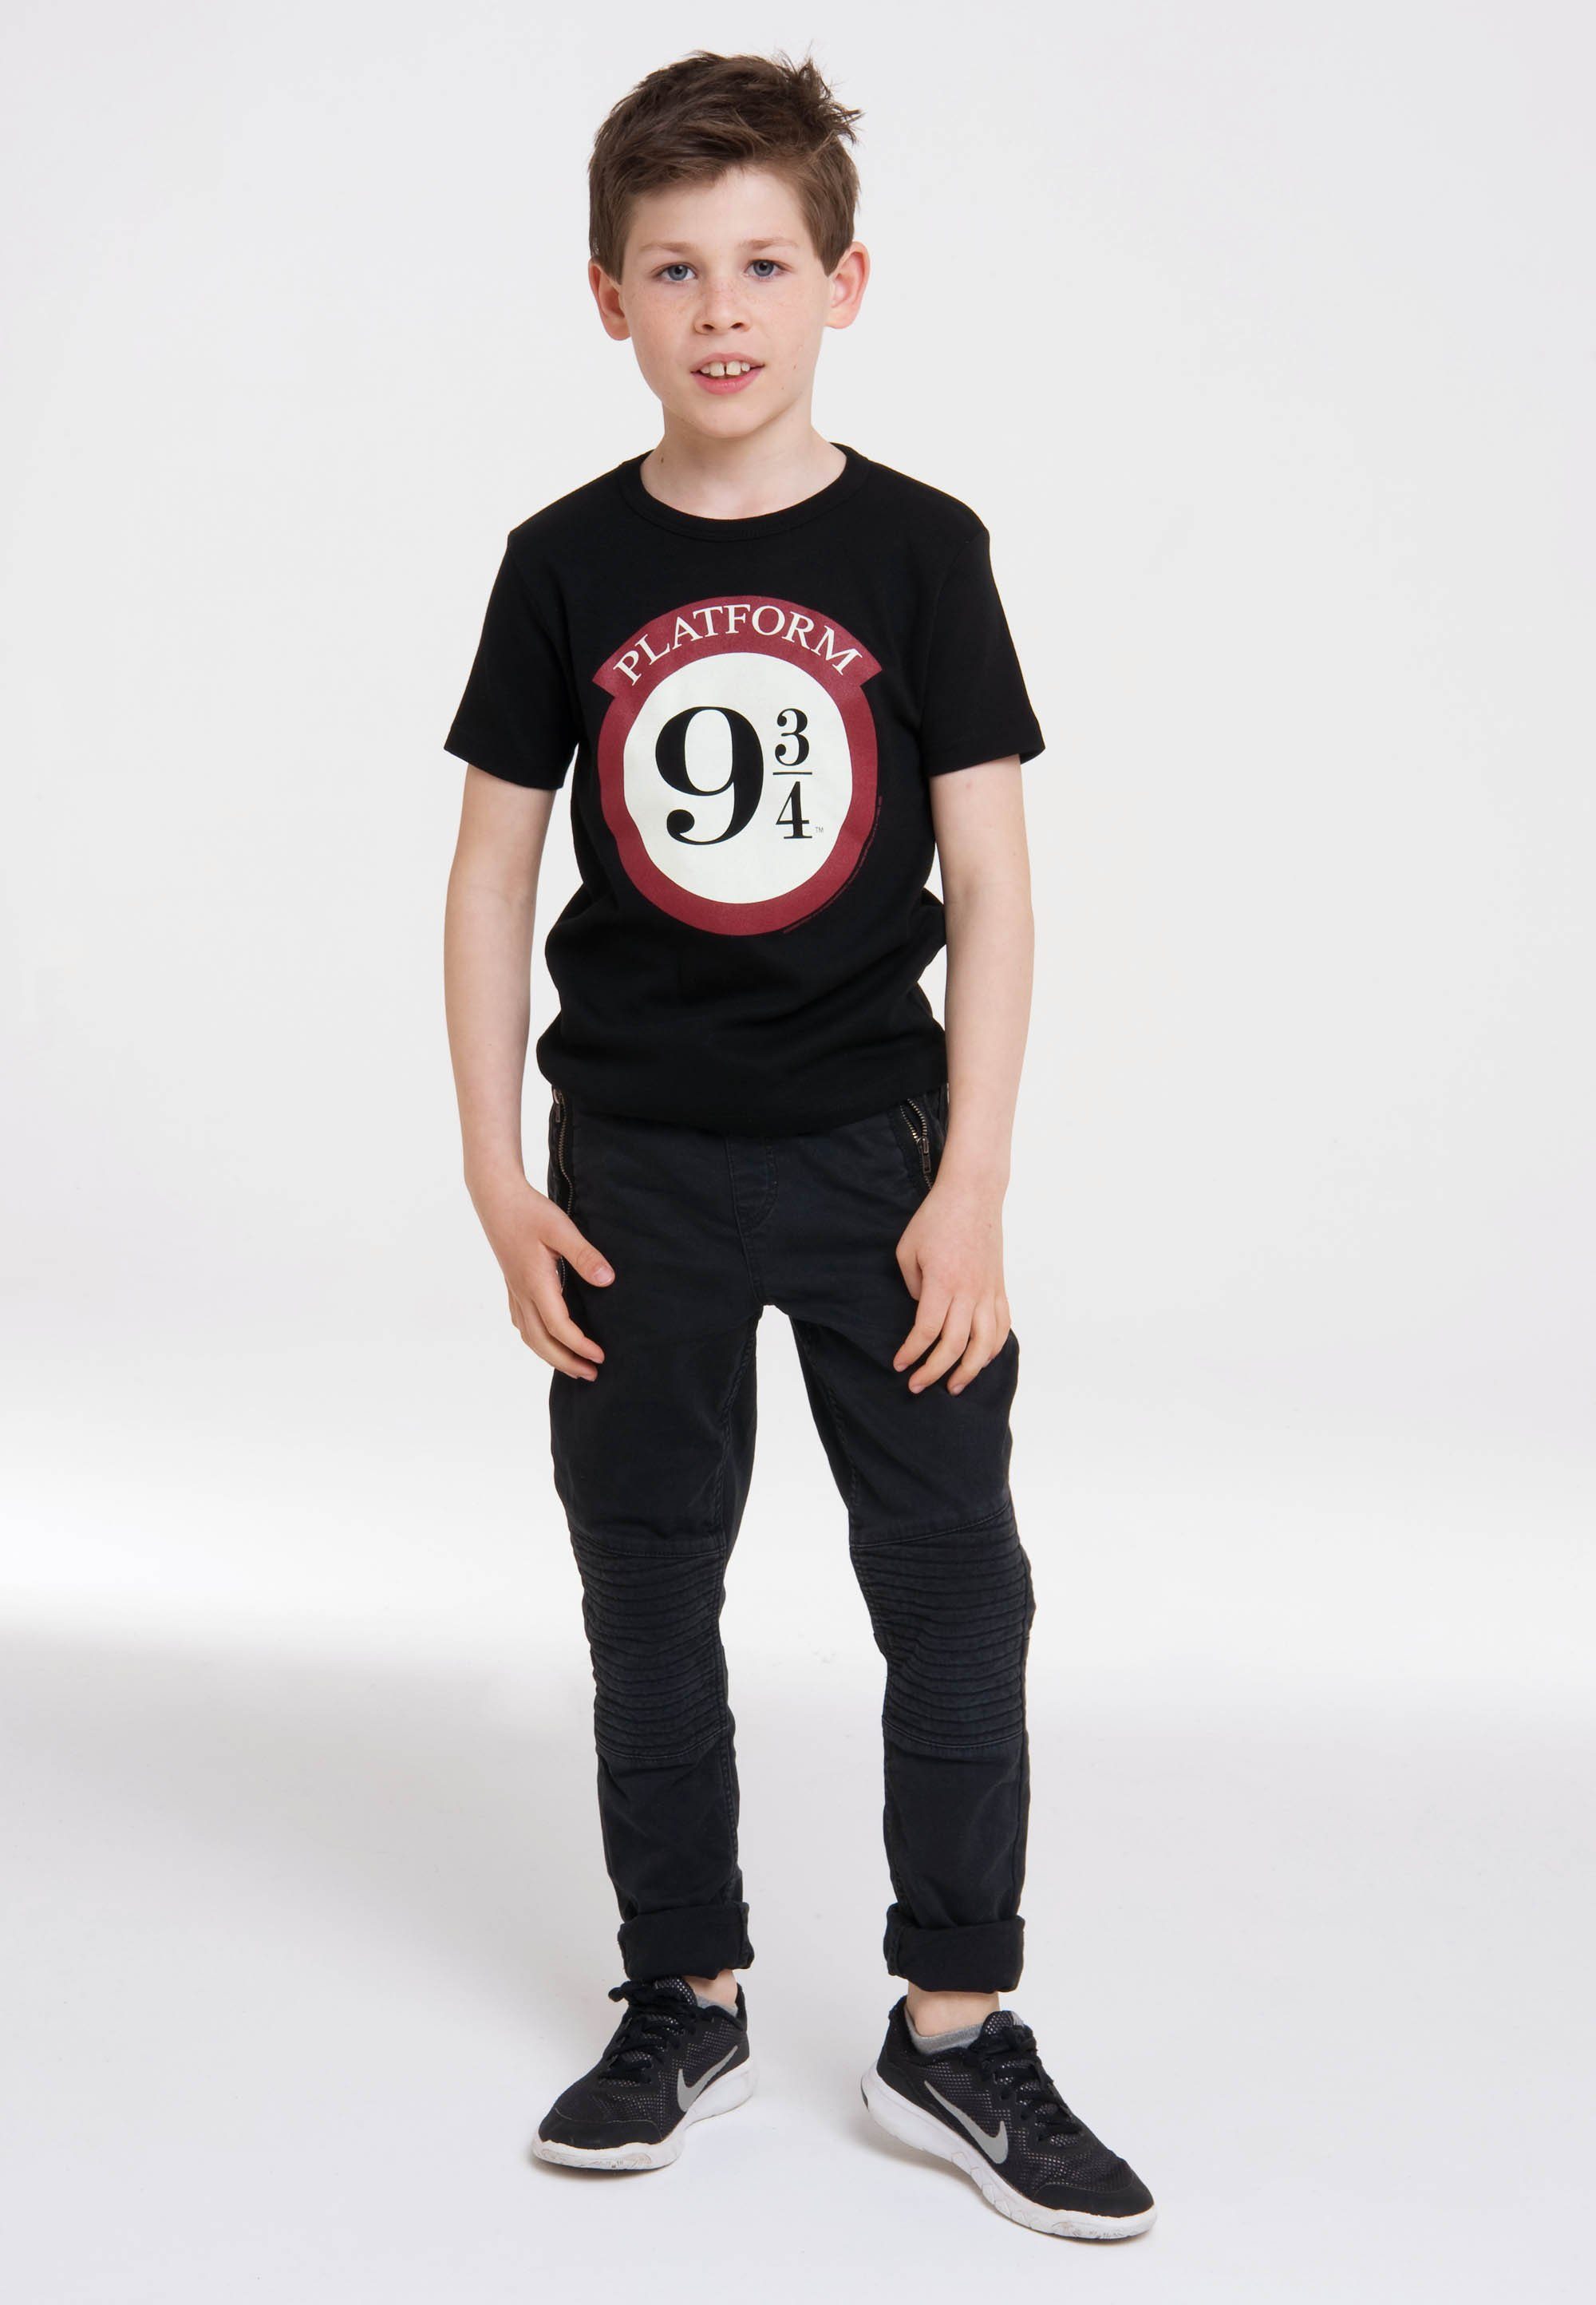 - 9 Potter lizenziertem LOGOSHIRT mit Platform 3/4 Originaldesign Harry T-Shirt